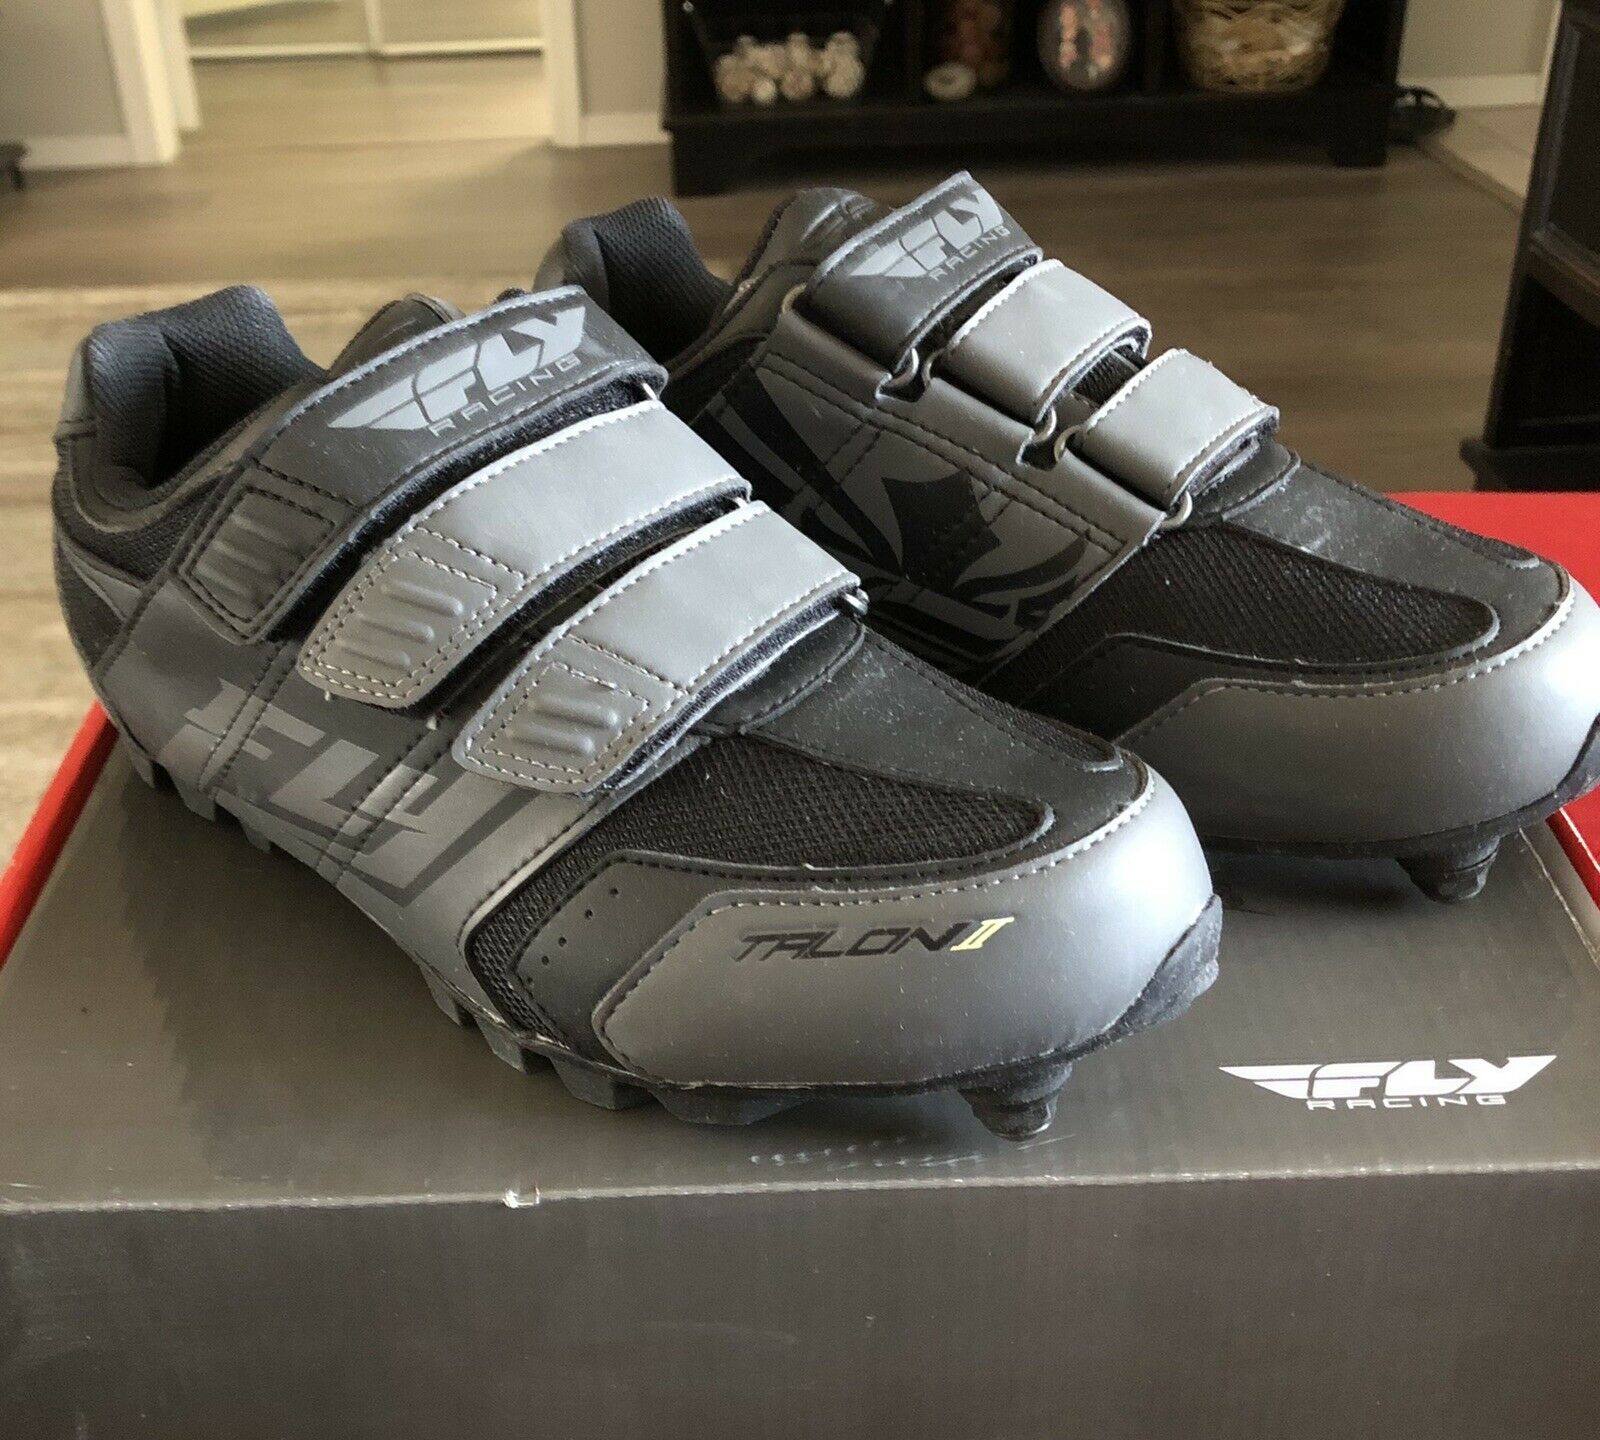 Fly Talon 2 Bmx/mountain Bike Shoes, Size 6, Spd, New In Box